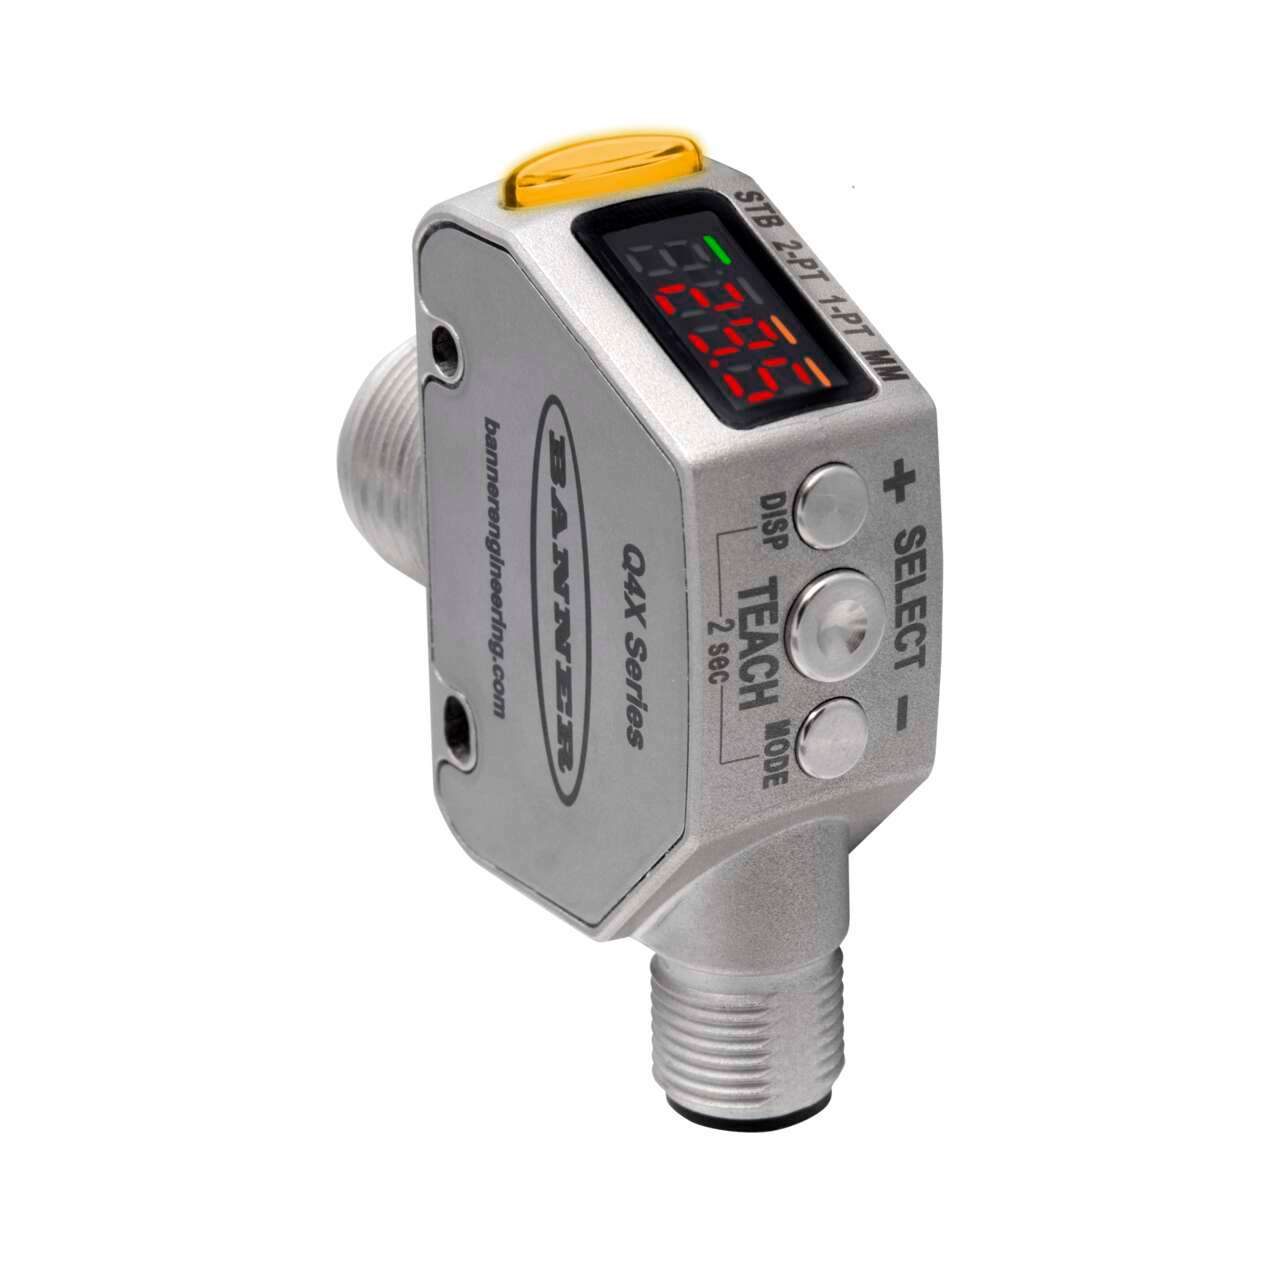 Q4X Series Laser Measurement Sensor